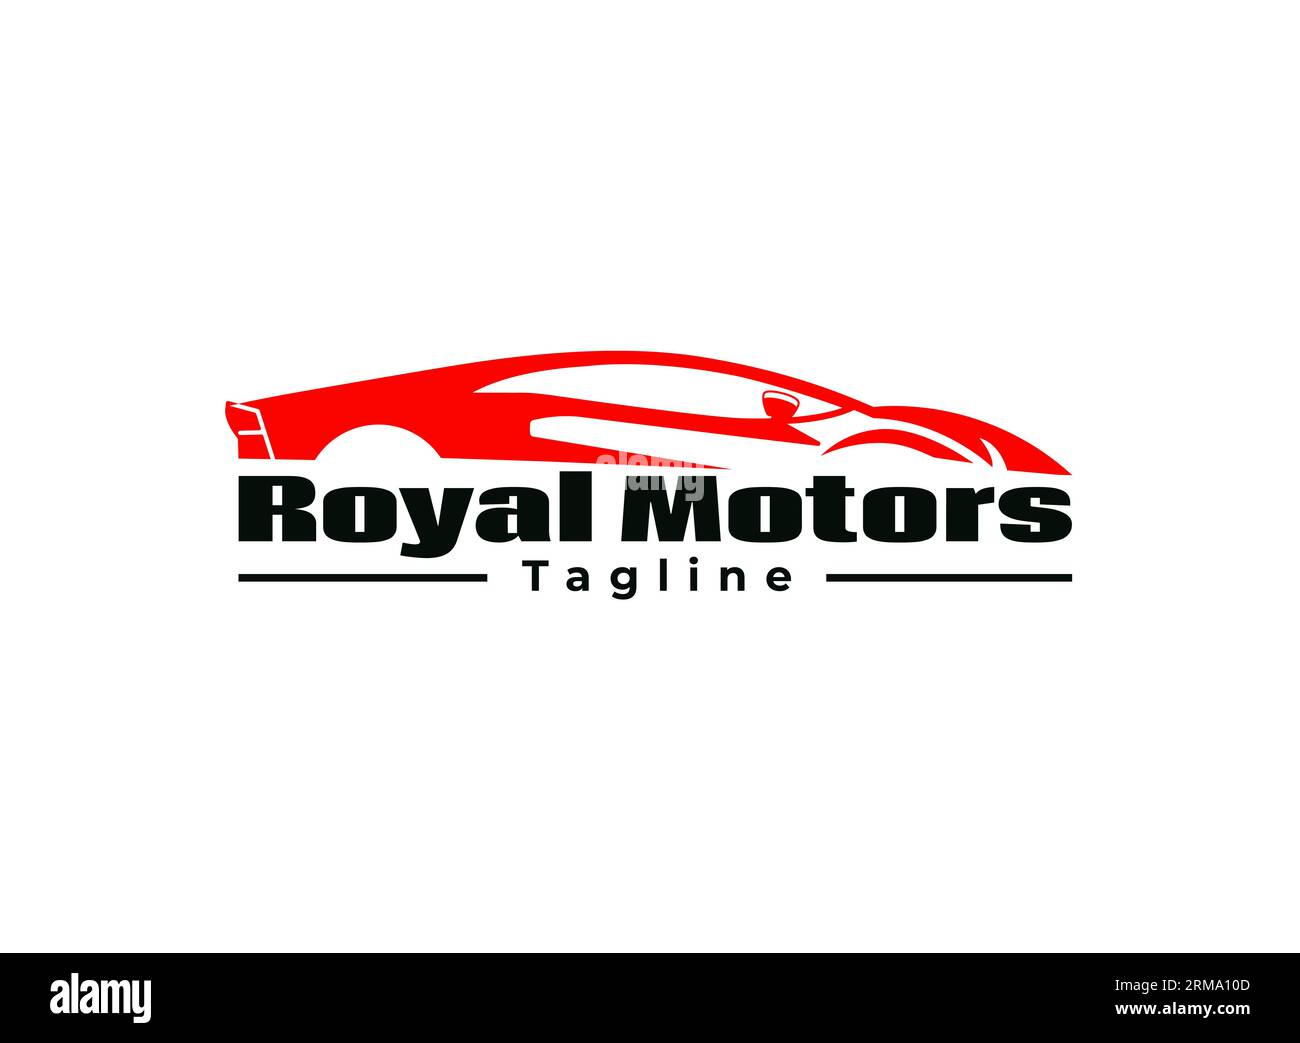 Royal Motors Lamborghini car logo Design, Square Gold minimal Modern Luxury Premium Logos pour Startup ecommerce Motor Cars Logos. Illustration de Vecteur